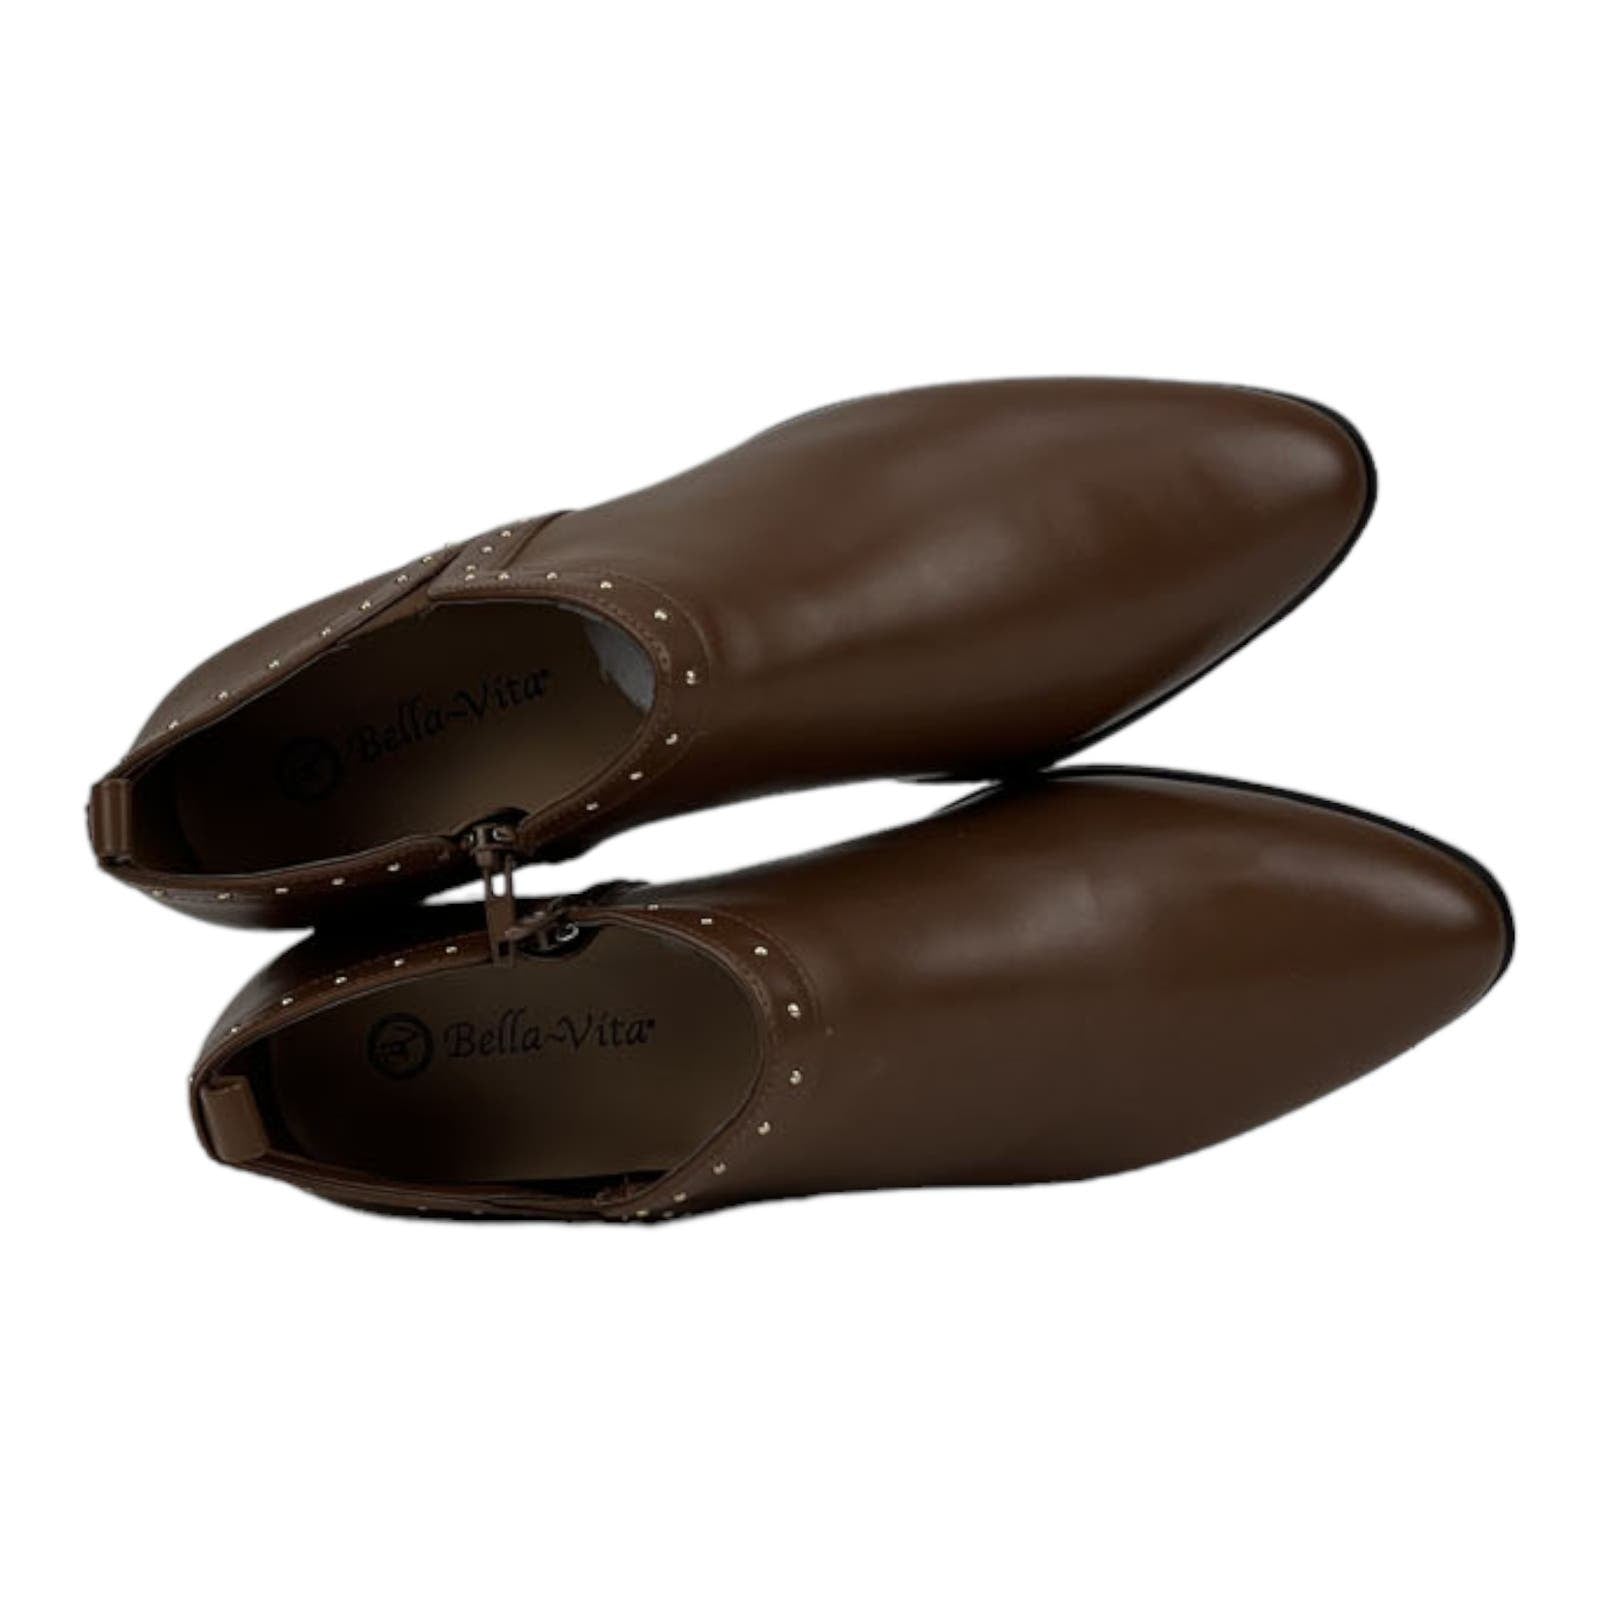 Bella Vita Women US 9 Dark Tan Brown Leather Ankle Boot Shoes